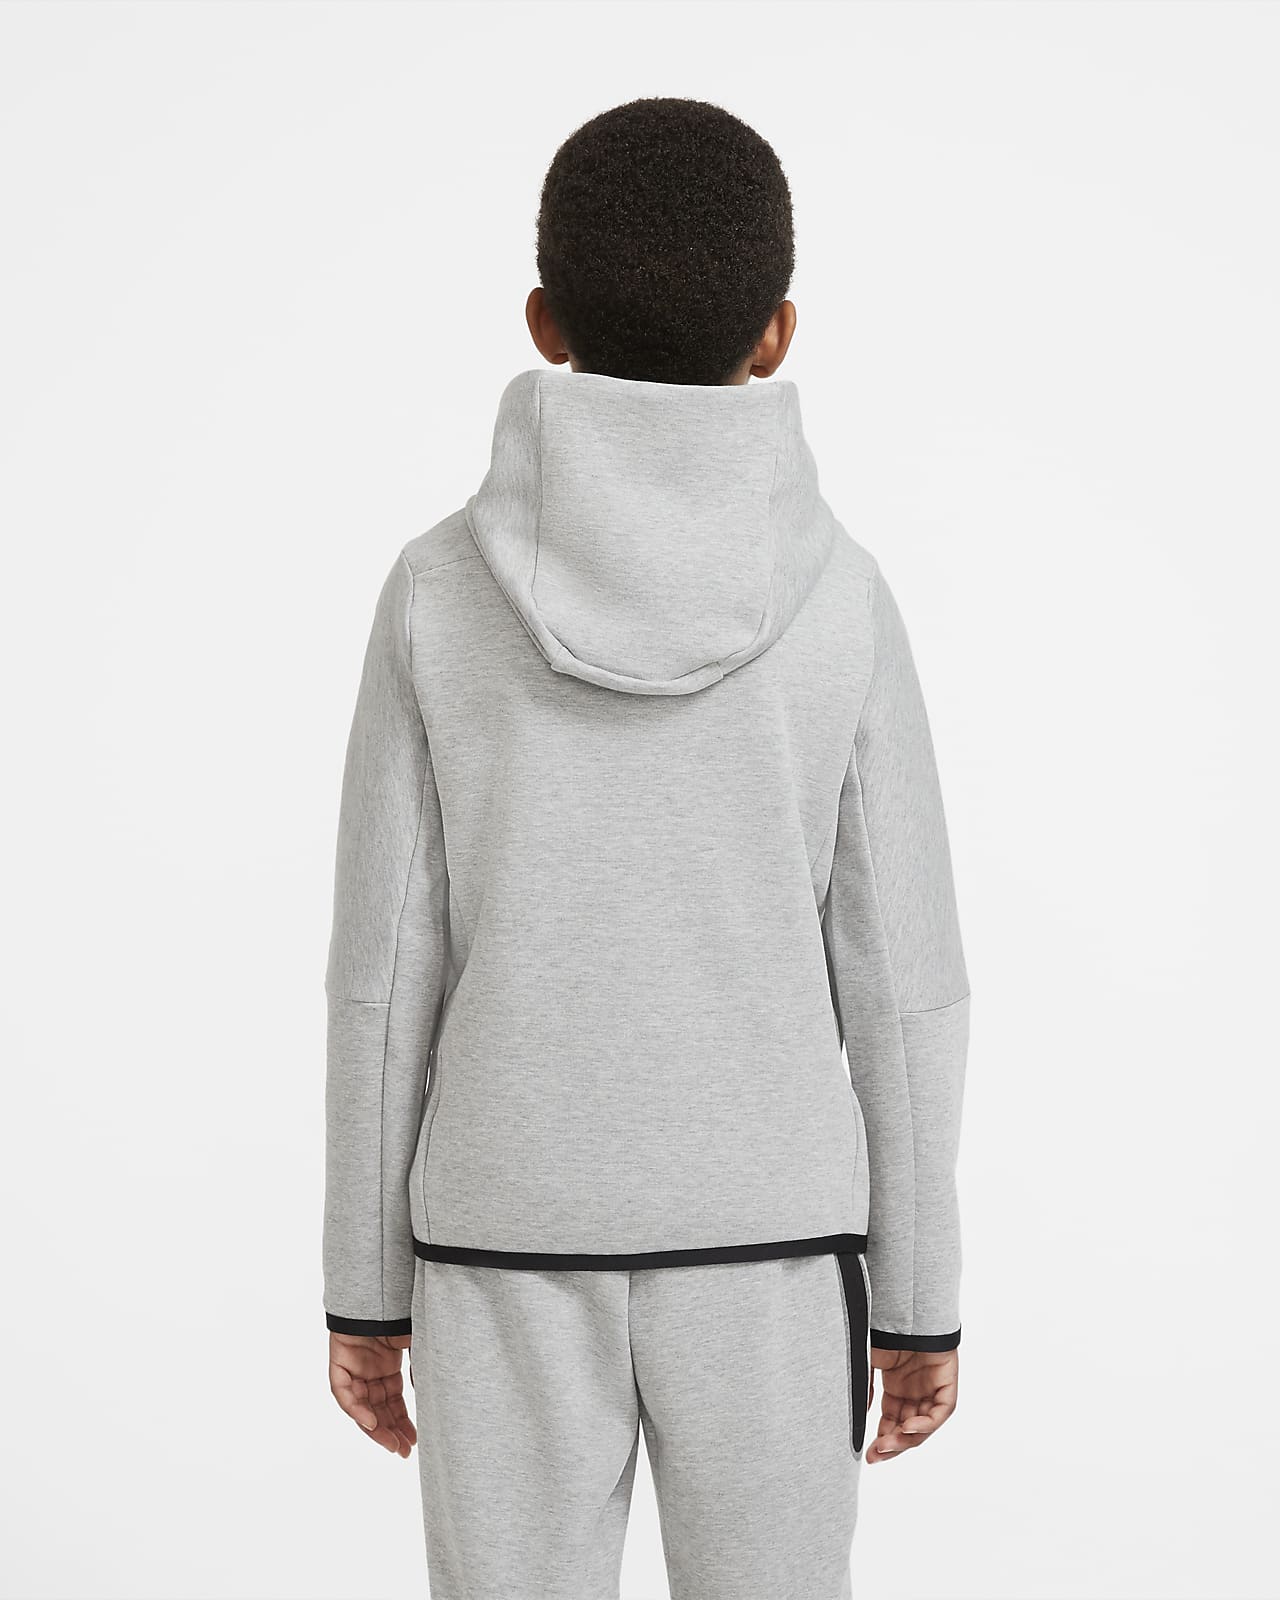 youth large nike hoodie